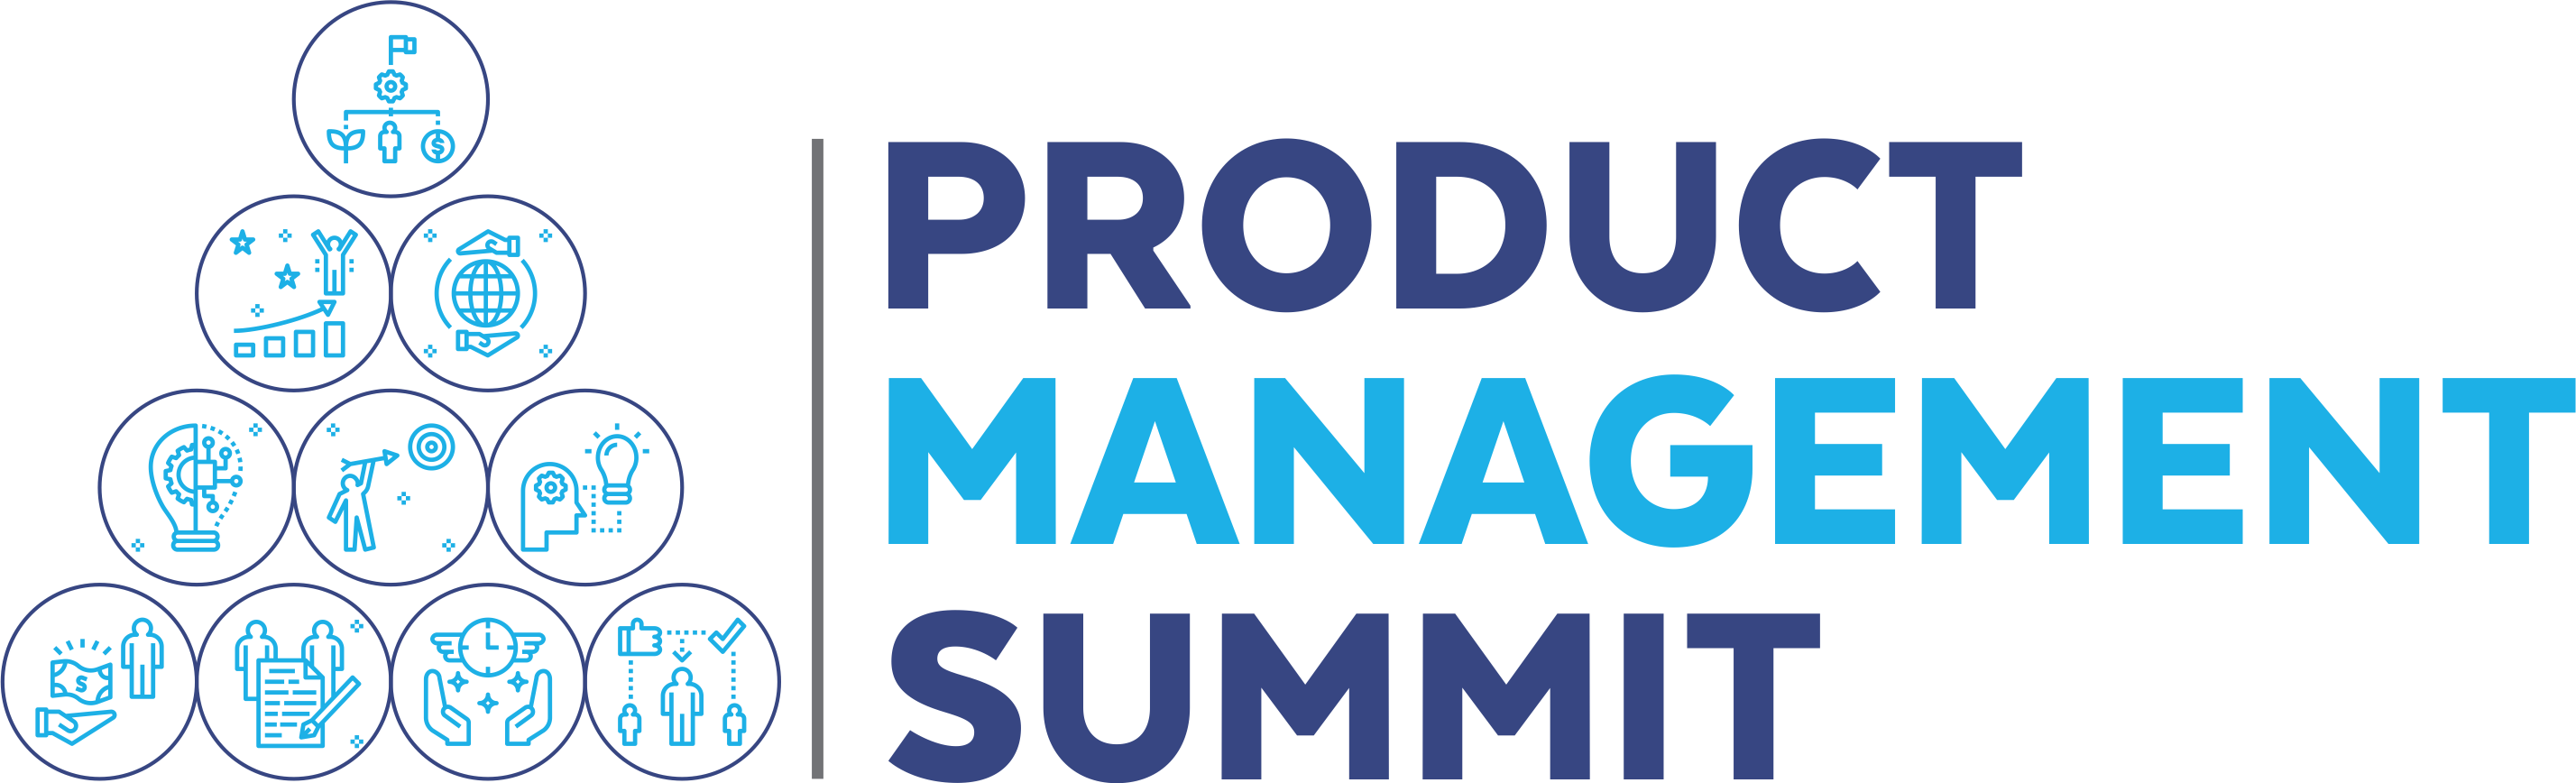 Product Management Summit